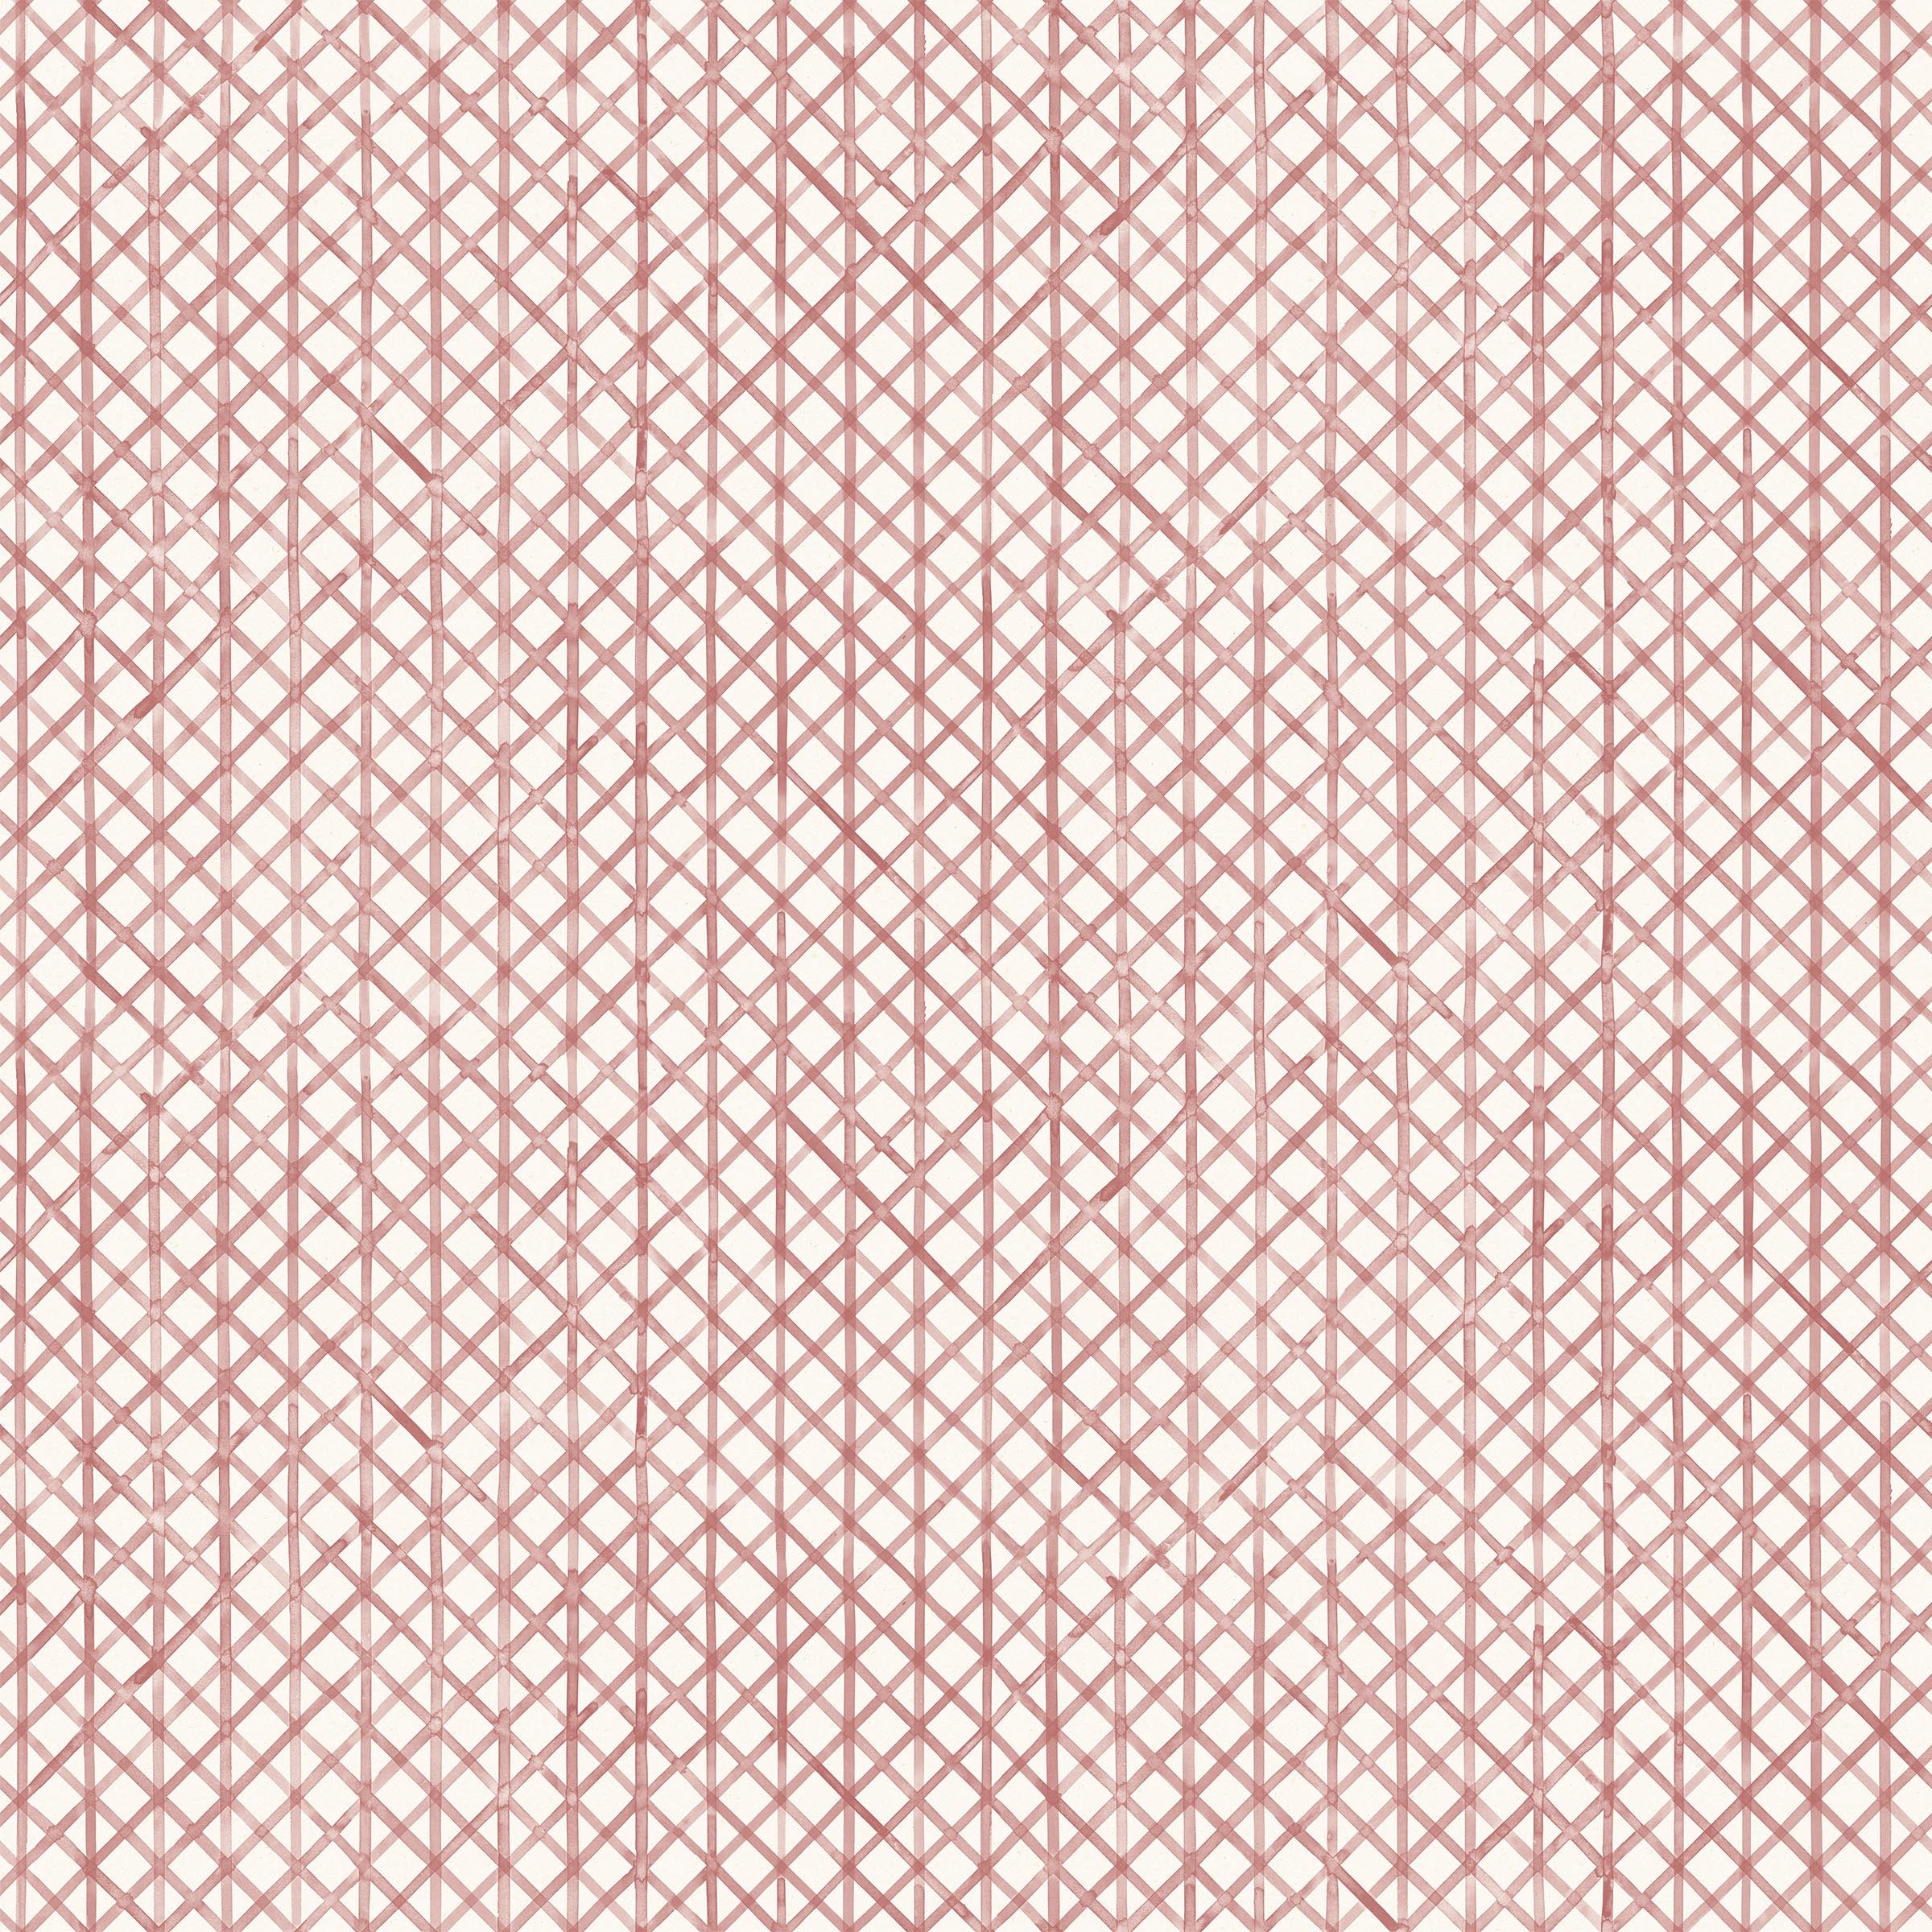 Detail of wallpaper in an intricate striped grid pattern in dusty rose on a white field.